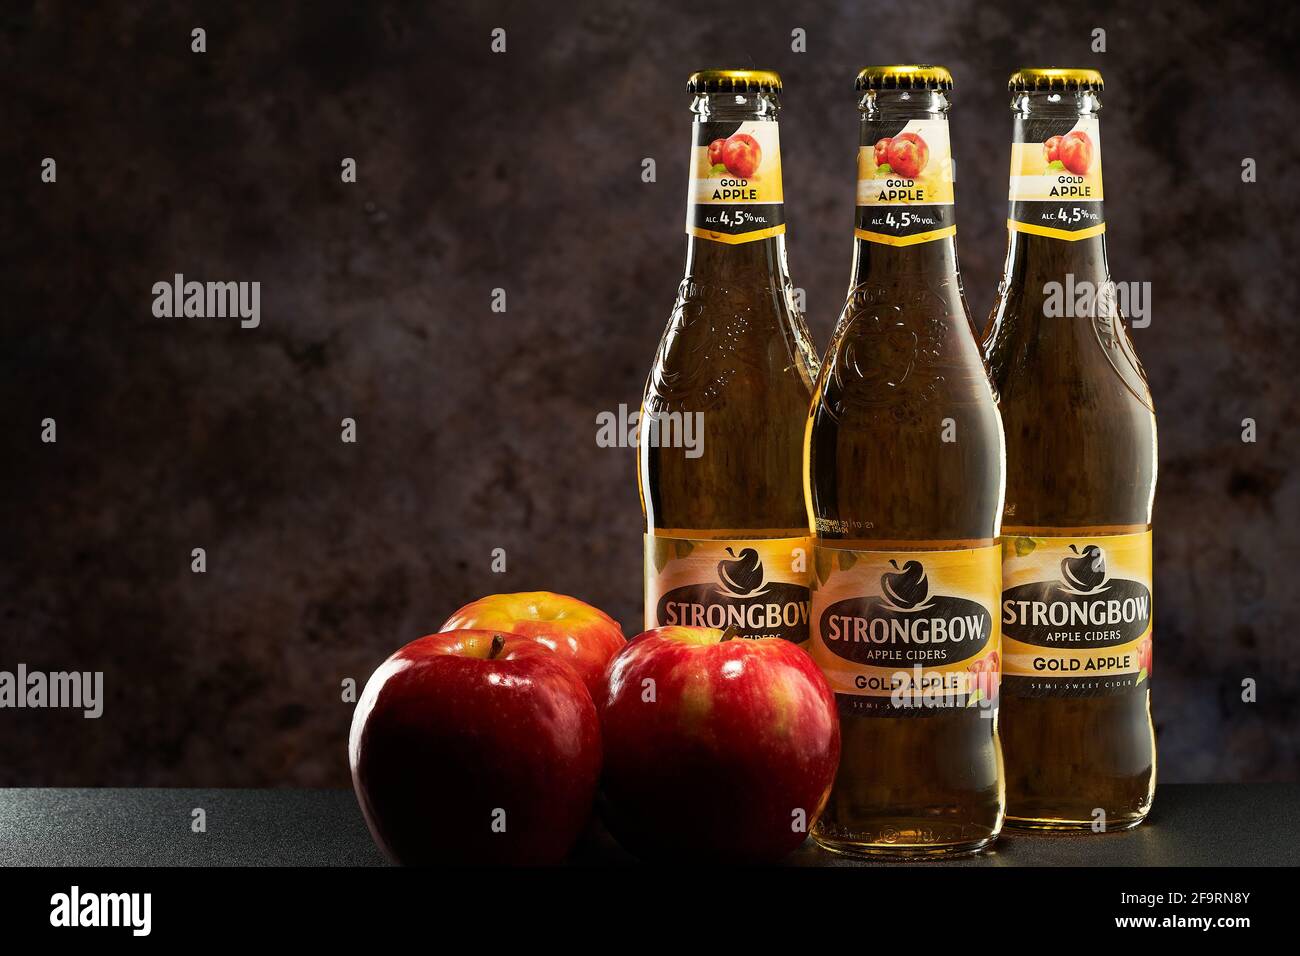 Tel-Aviv,Israel - 20.04.21.Gold Apple Cider light alcoholic beverage on a dark background. Three fresh red apples on the bottle's side. Stock Photo